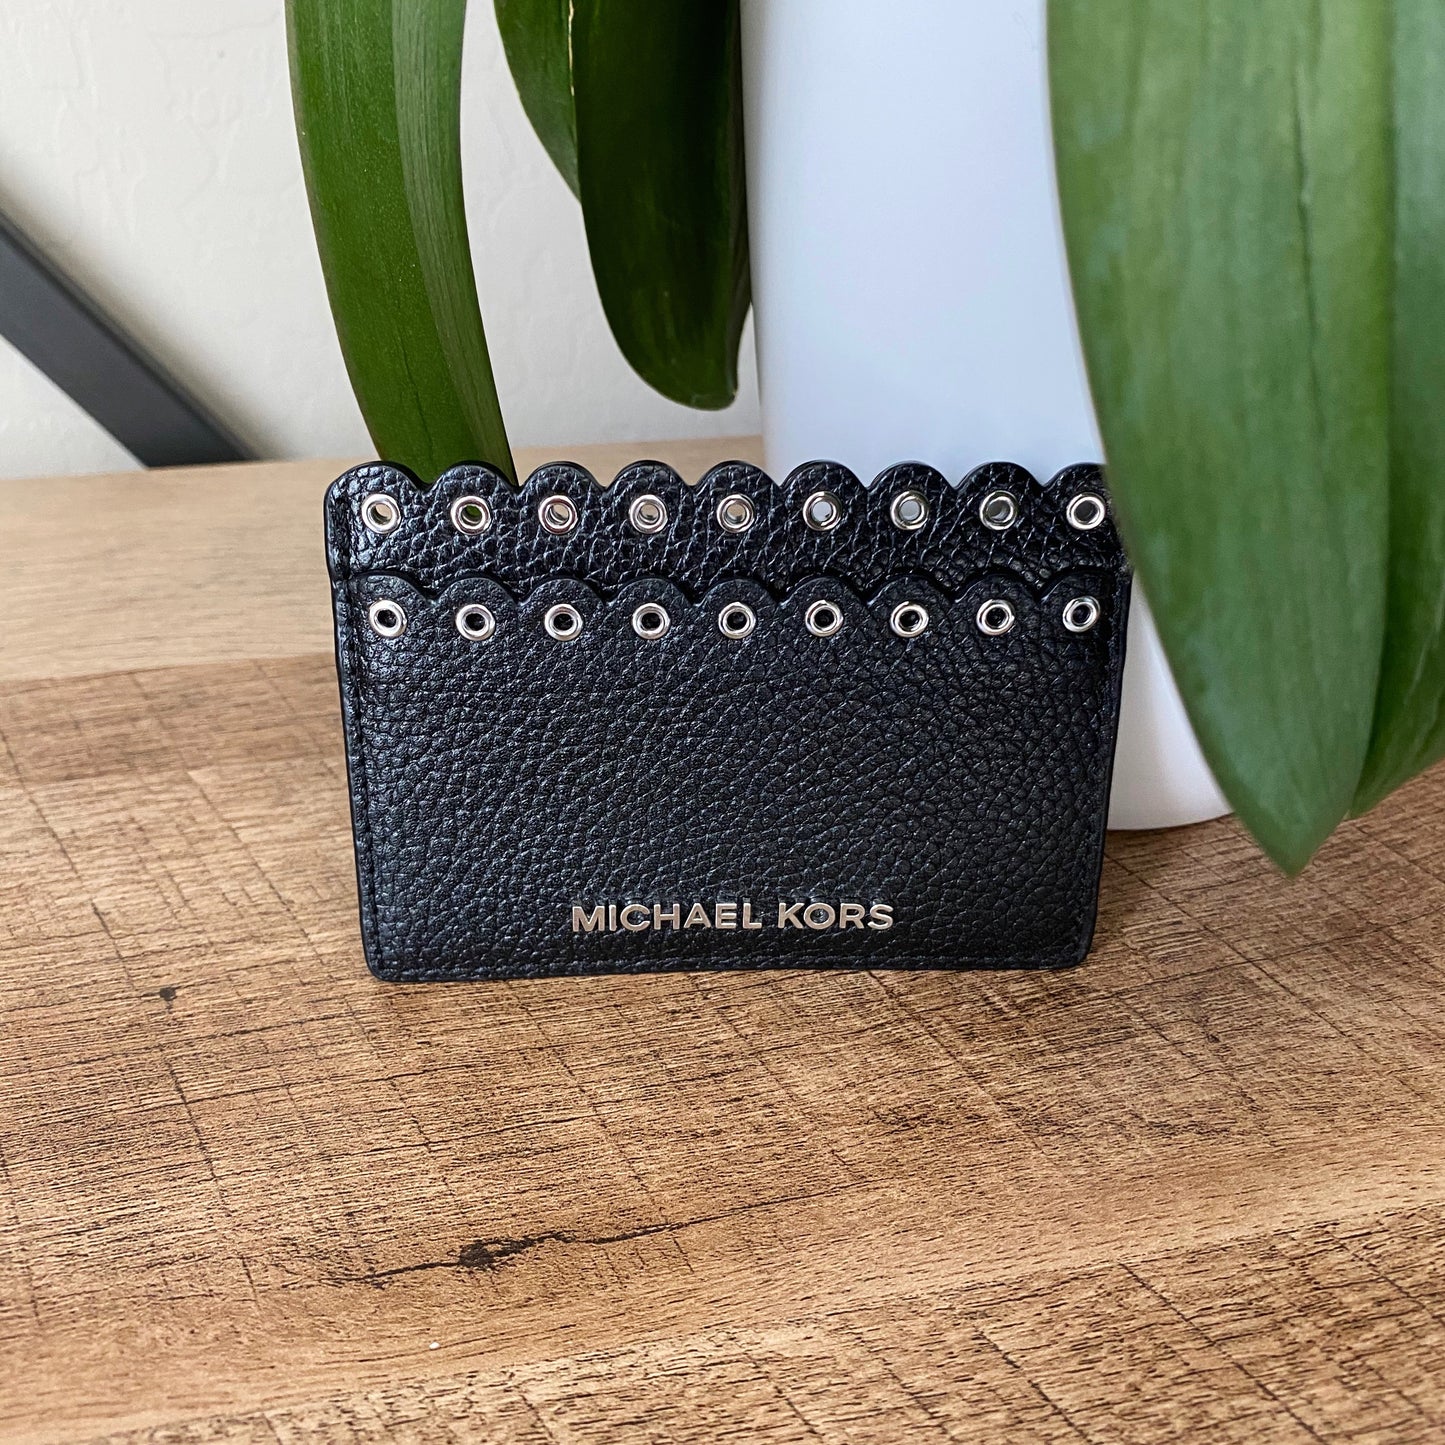 Michael Kors Leather Eyelet Studded Card Holder